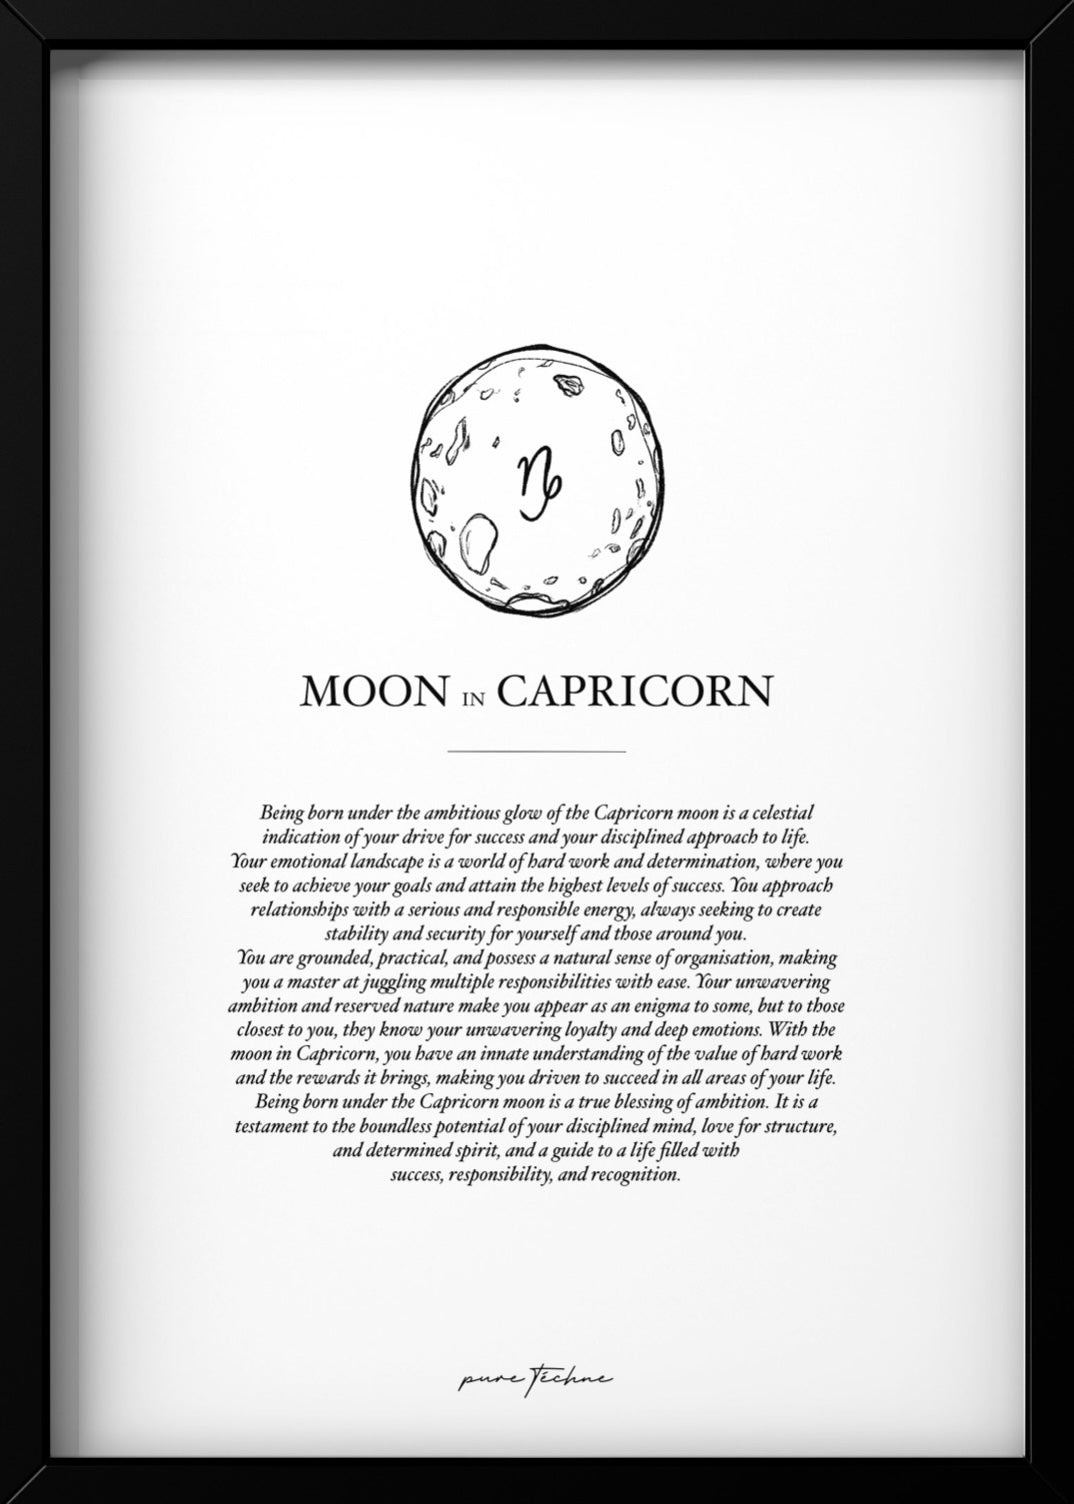 The Capricorn Moon